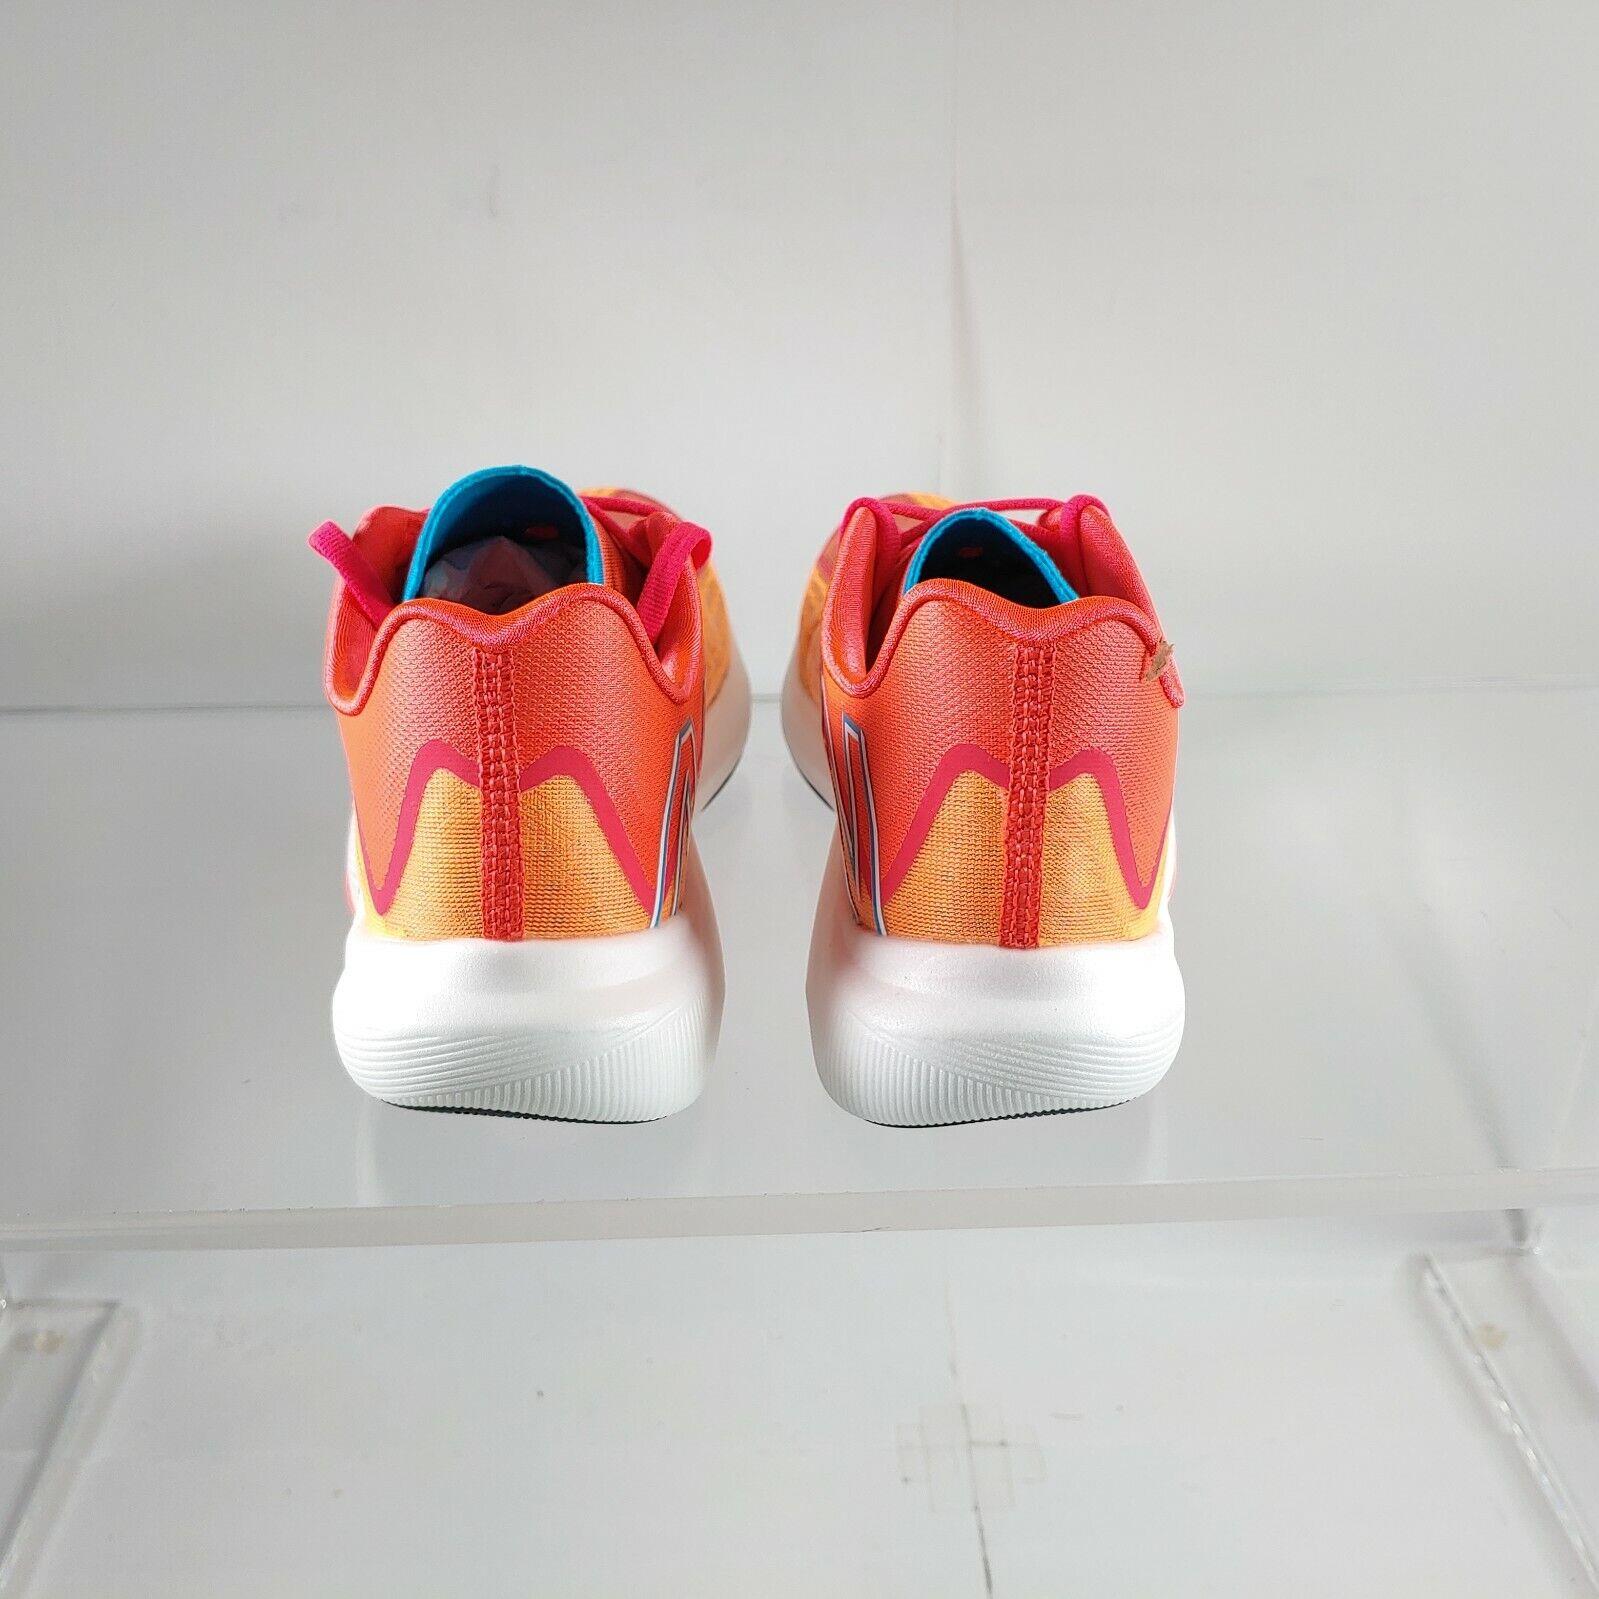 New Balance shoes FuelCell Rebel - Orange , Citrus Punch/Vivid Coral Manufacturer 5